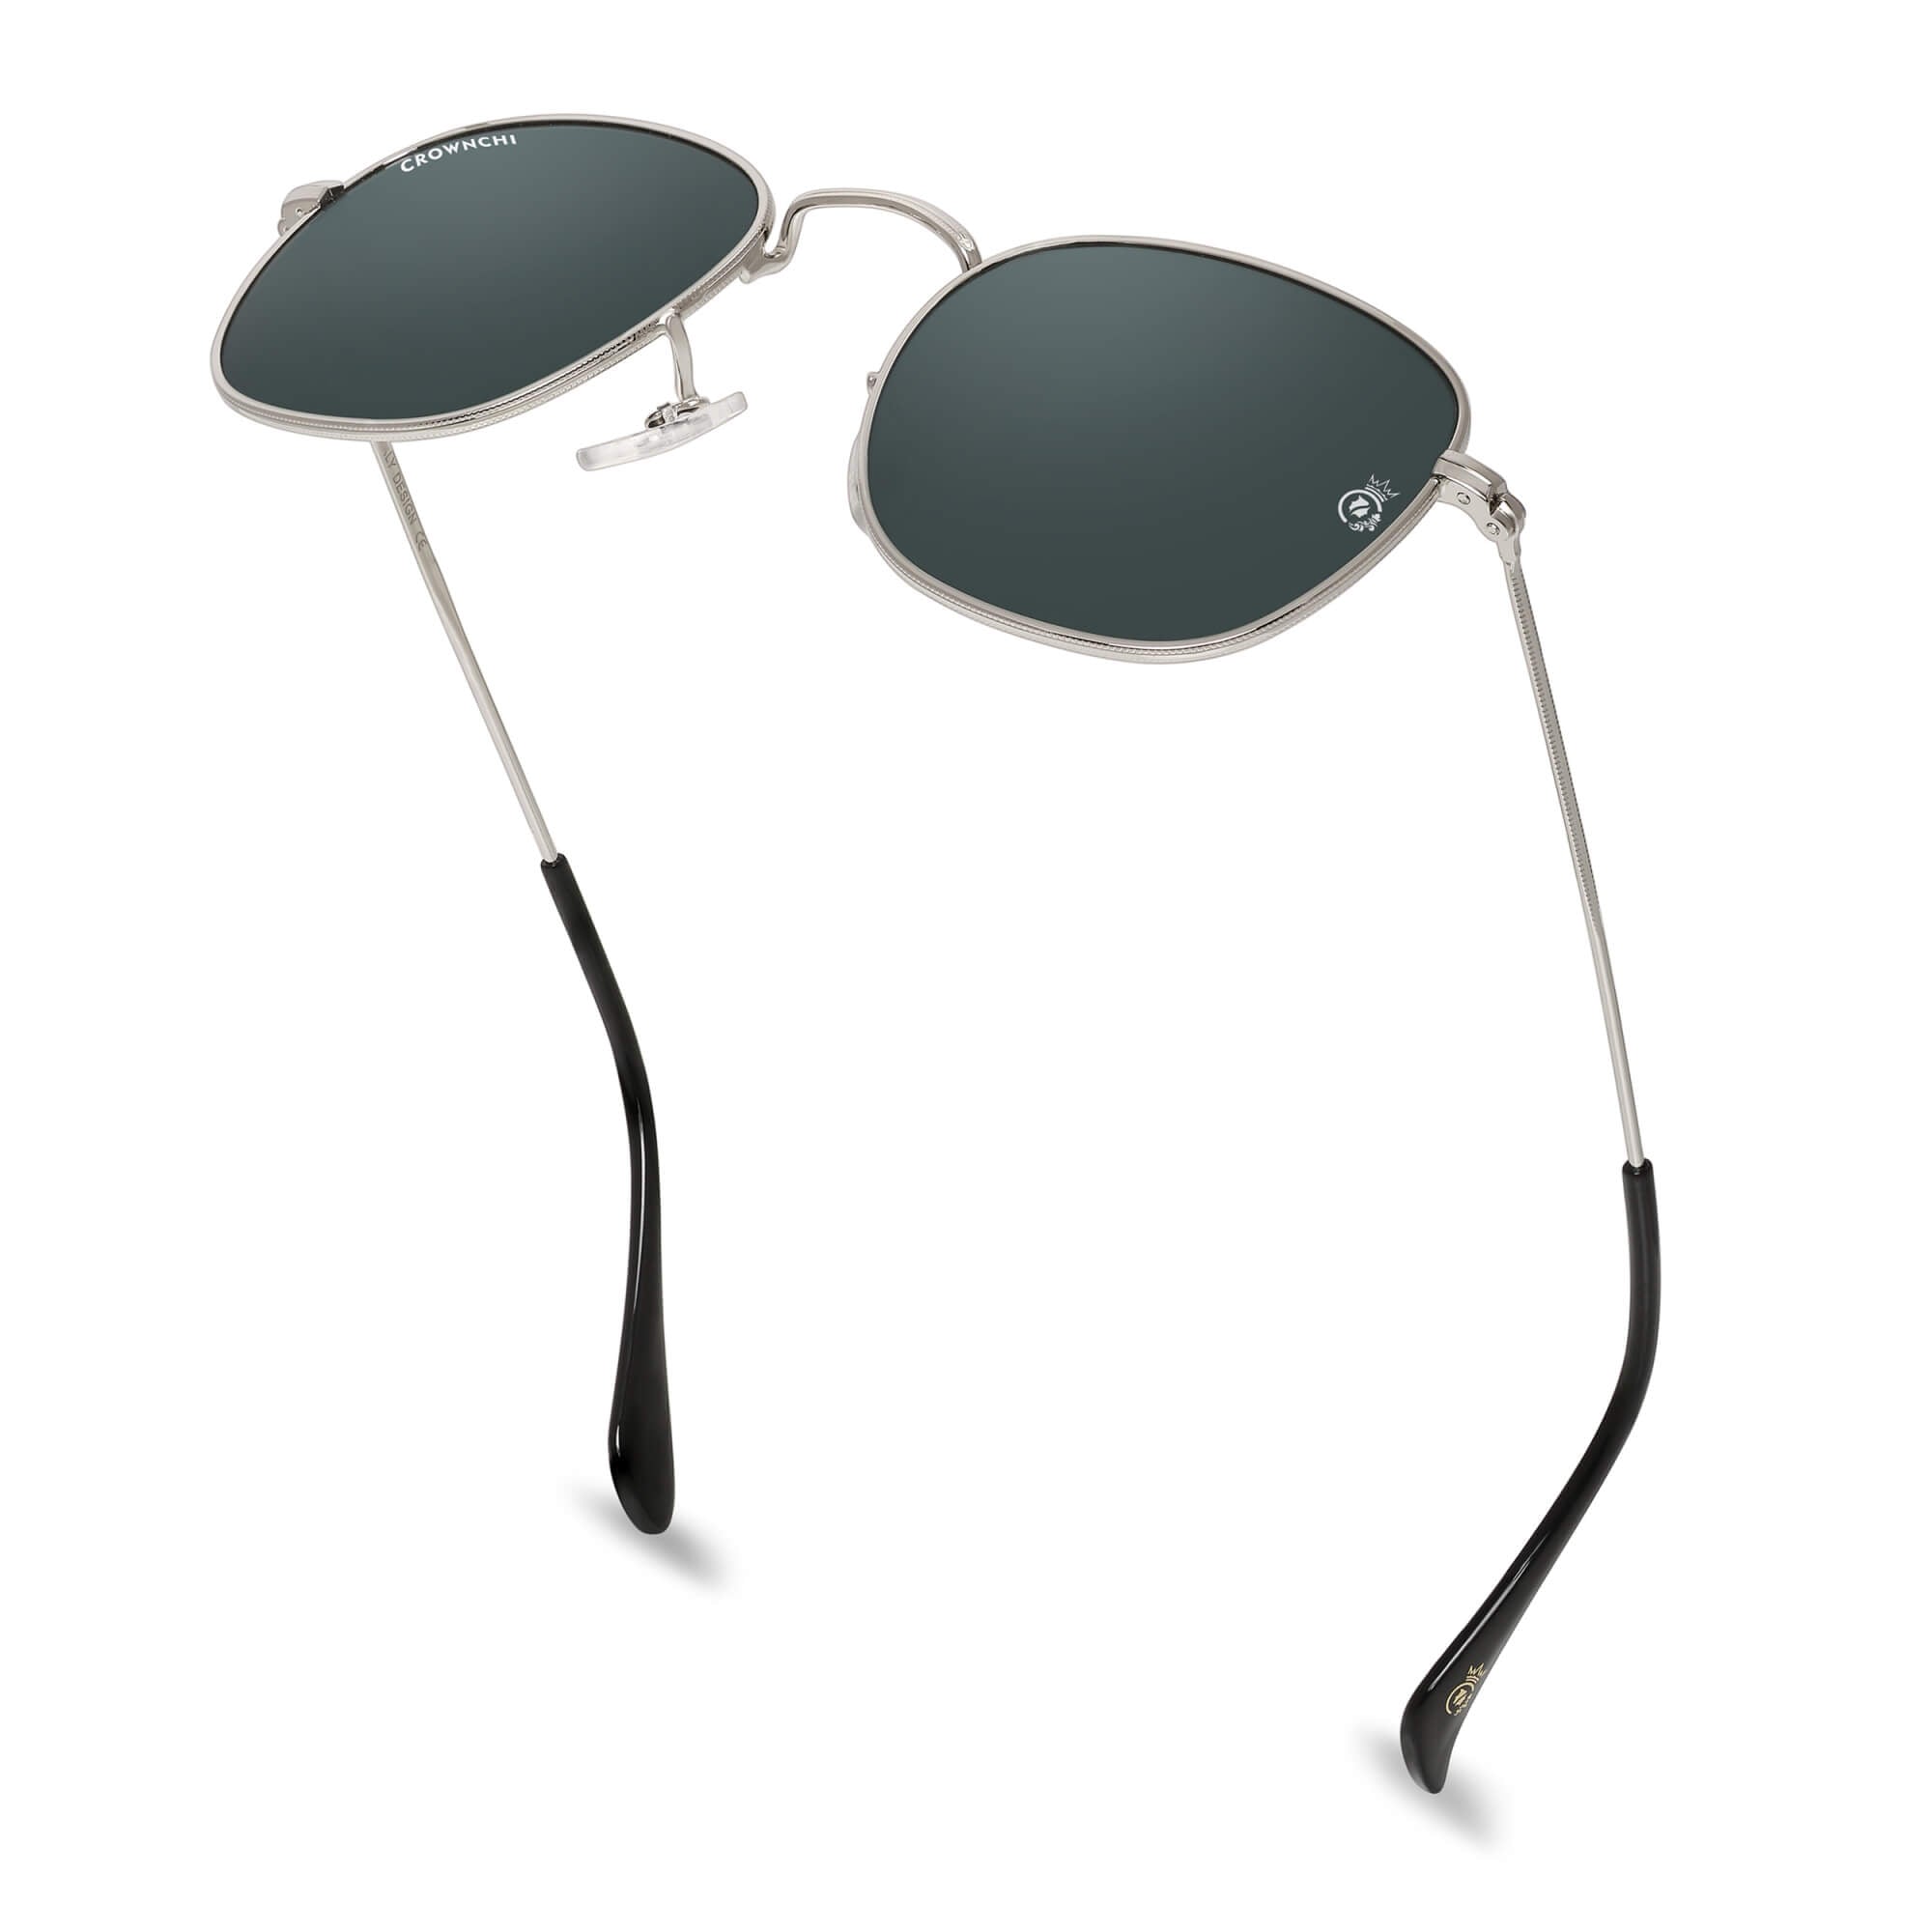 Lucas Silver Black Round Edition Sunglasses